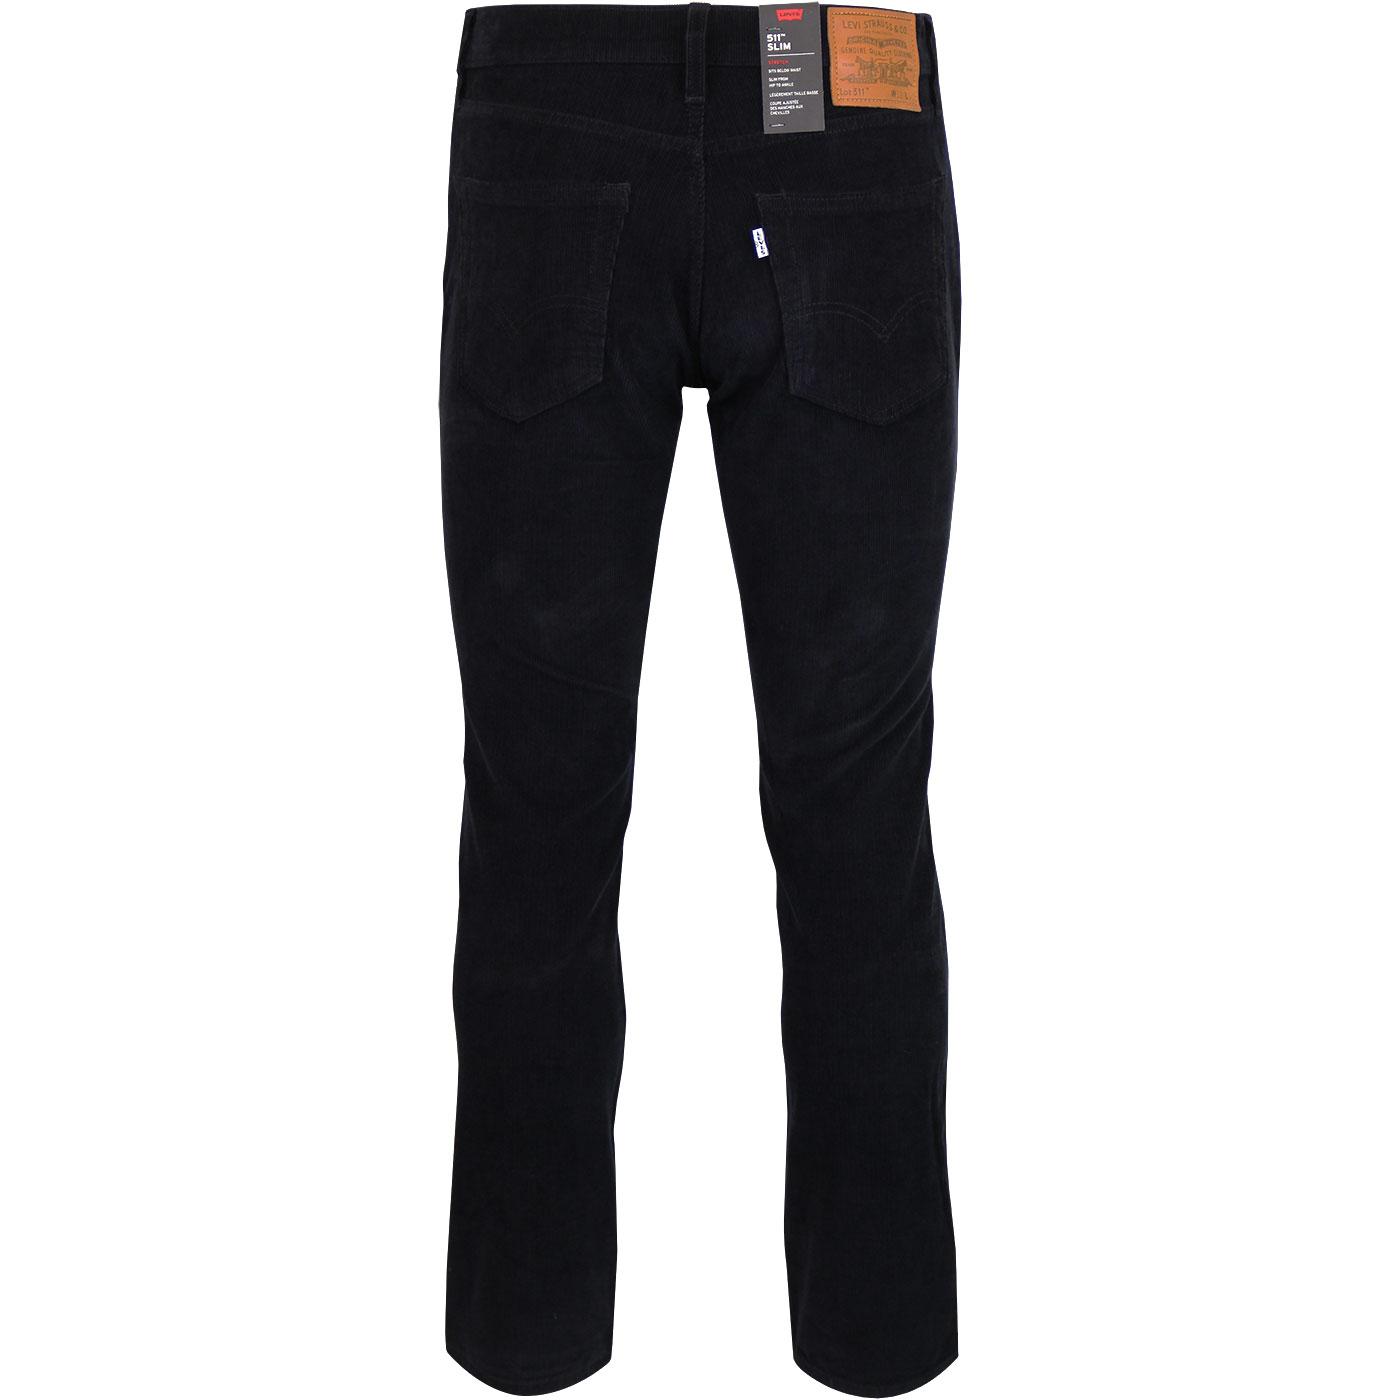 LEVI'S 511 Retro Men's Mod Slim Cord Jeans in Mineral Black